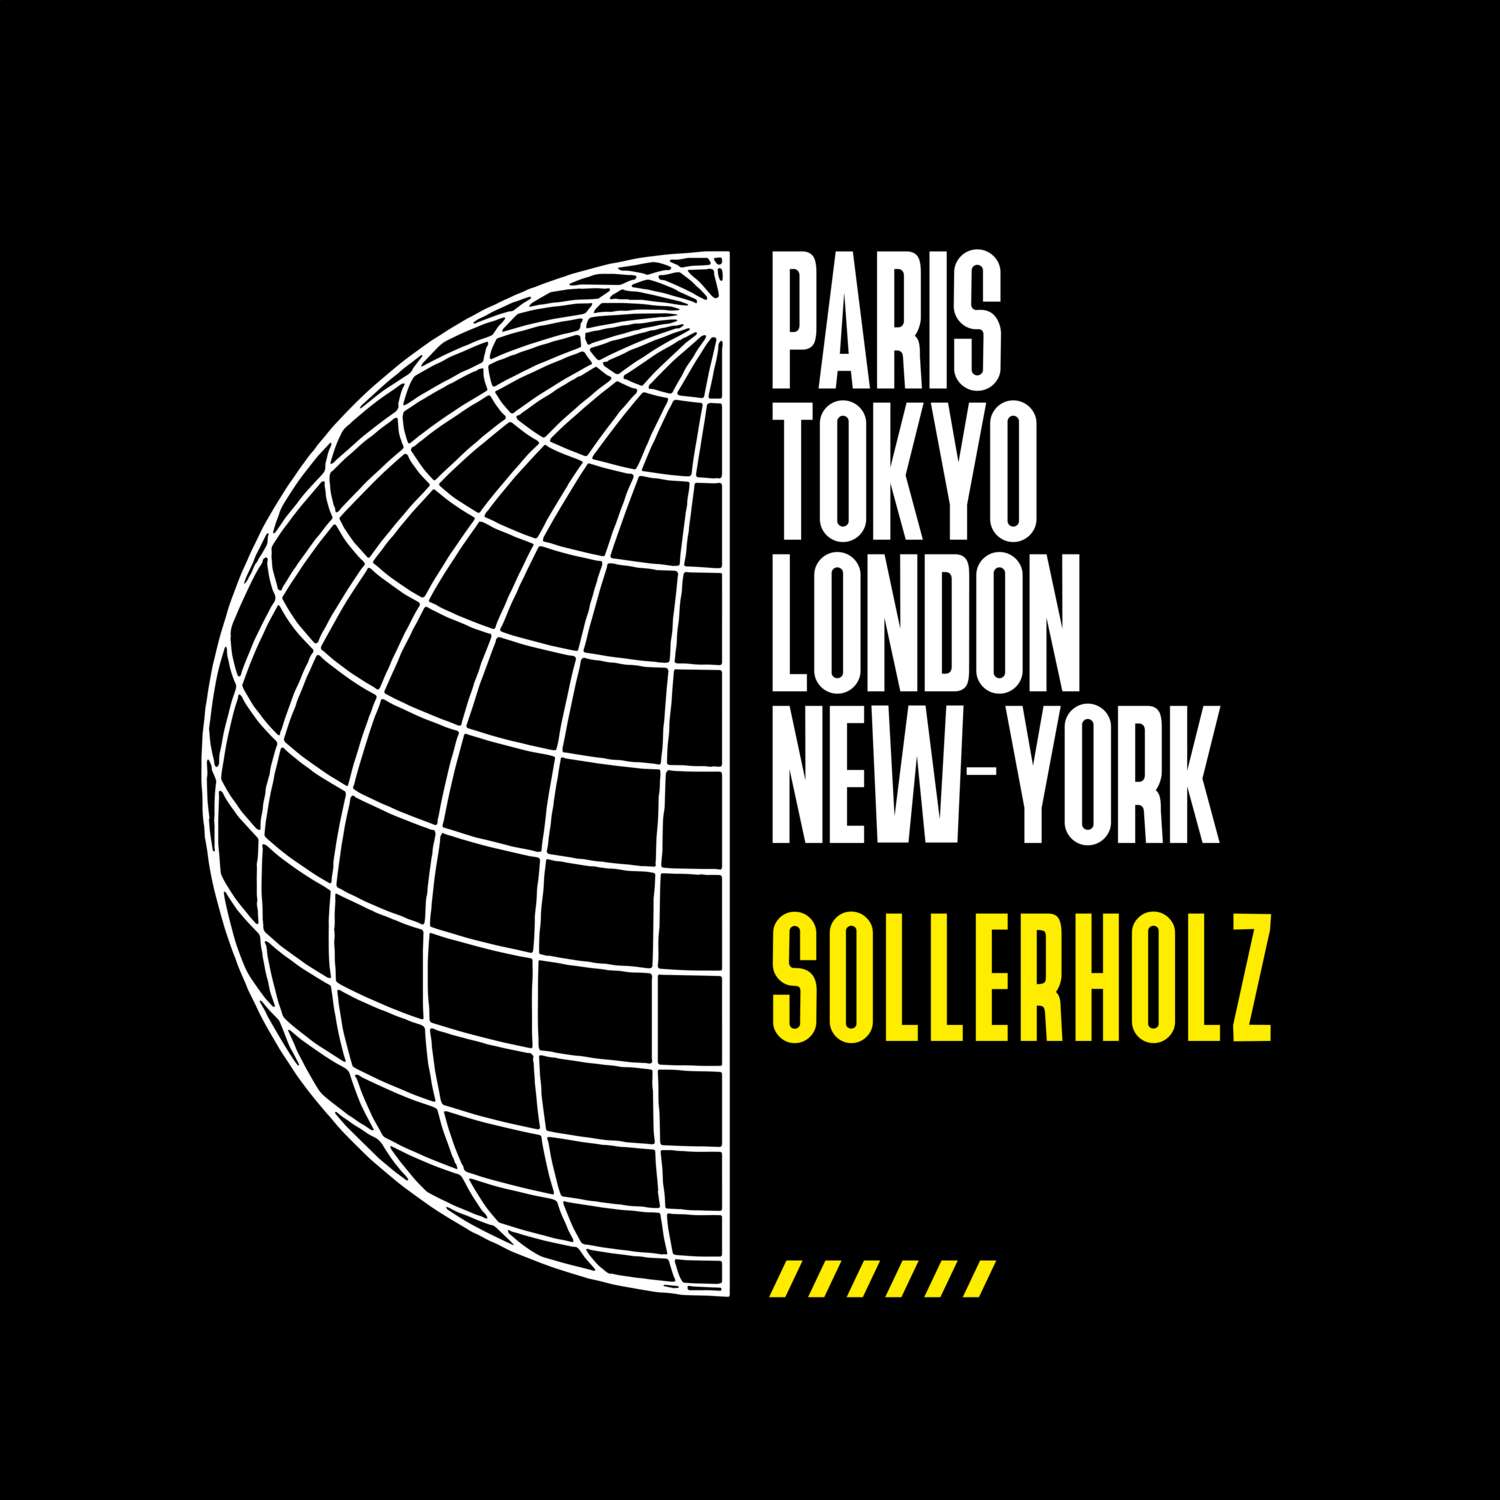 Sollerholz T-Shirt »Paris Tokyo London«